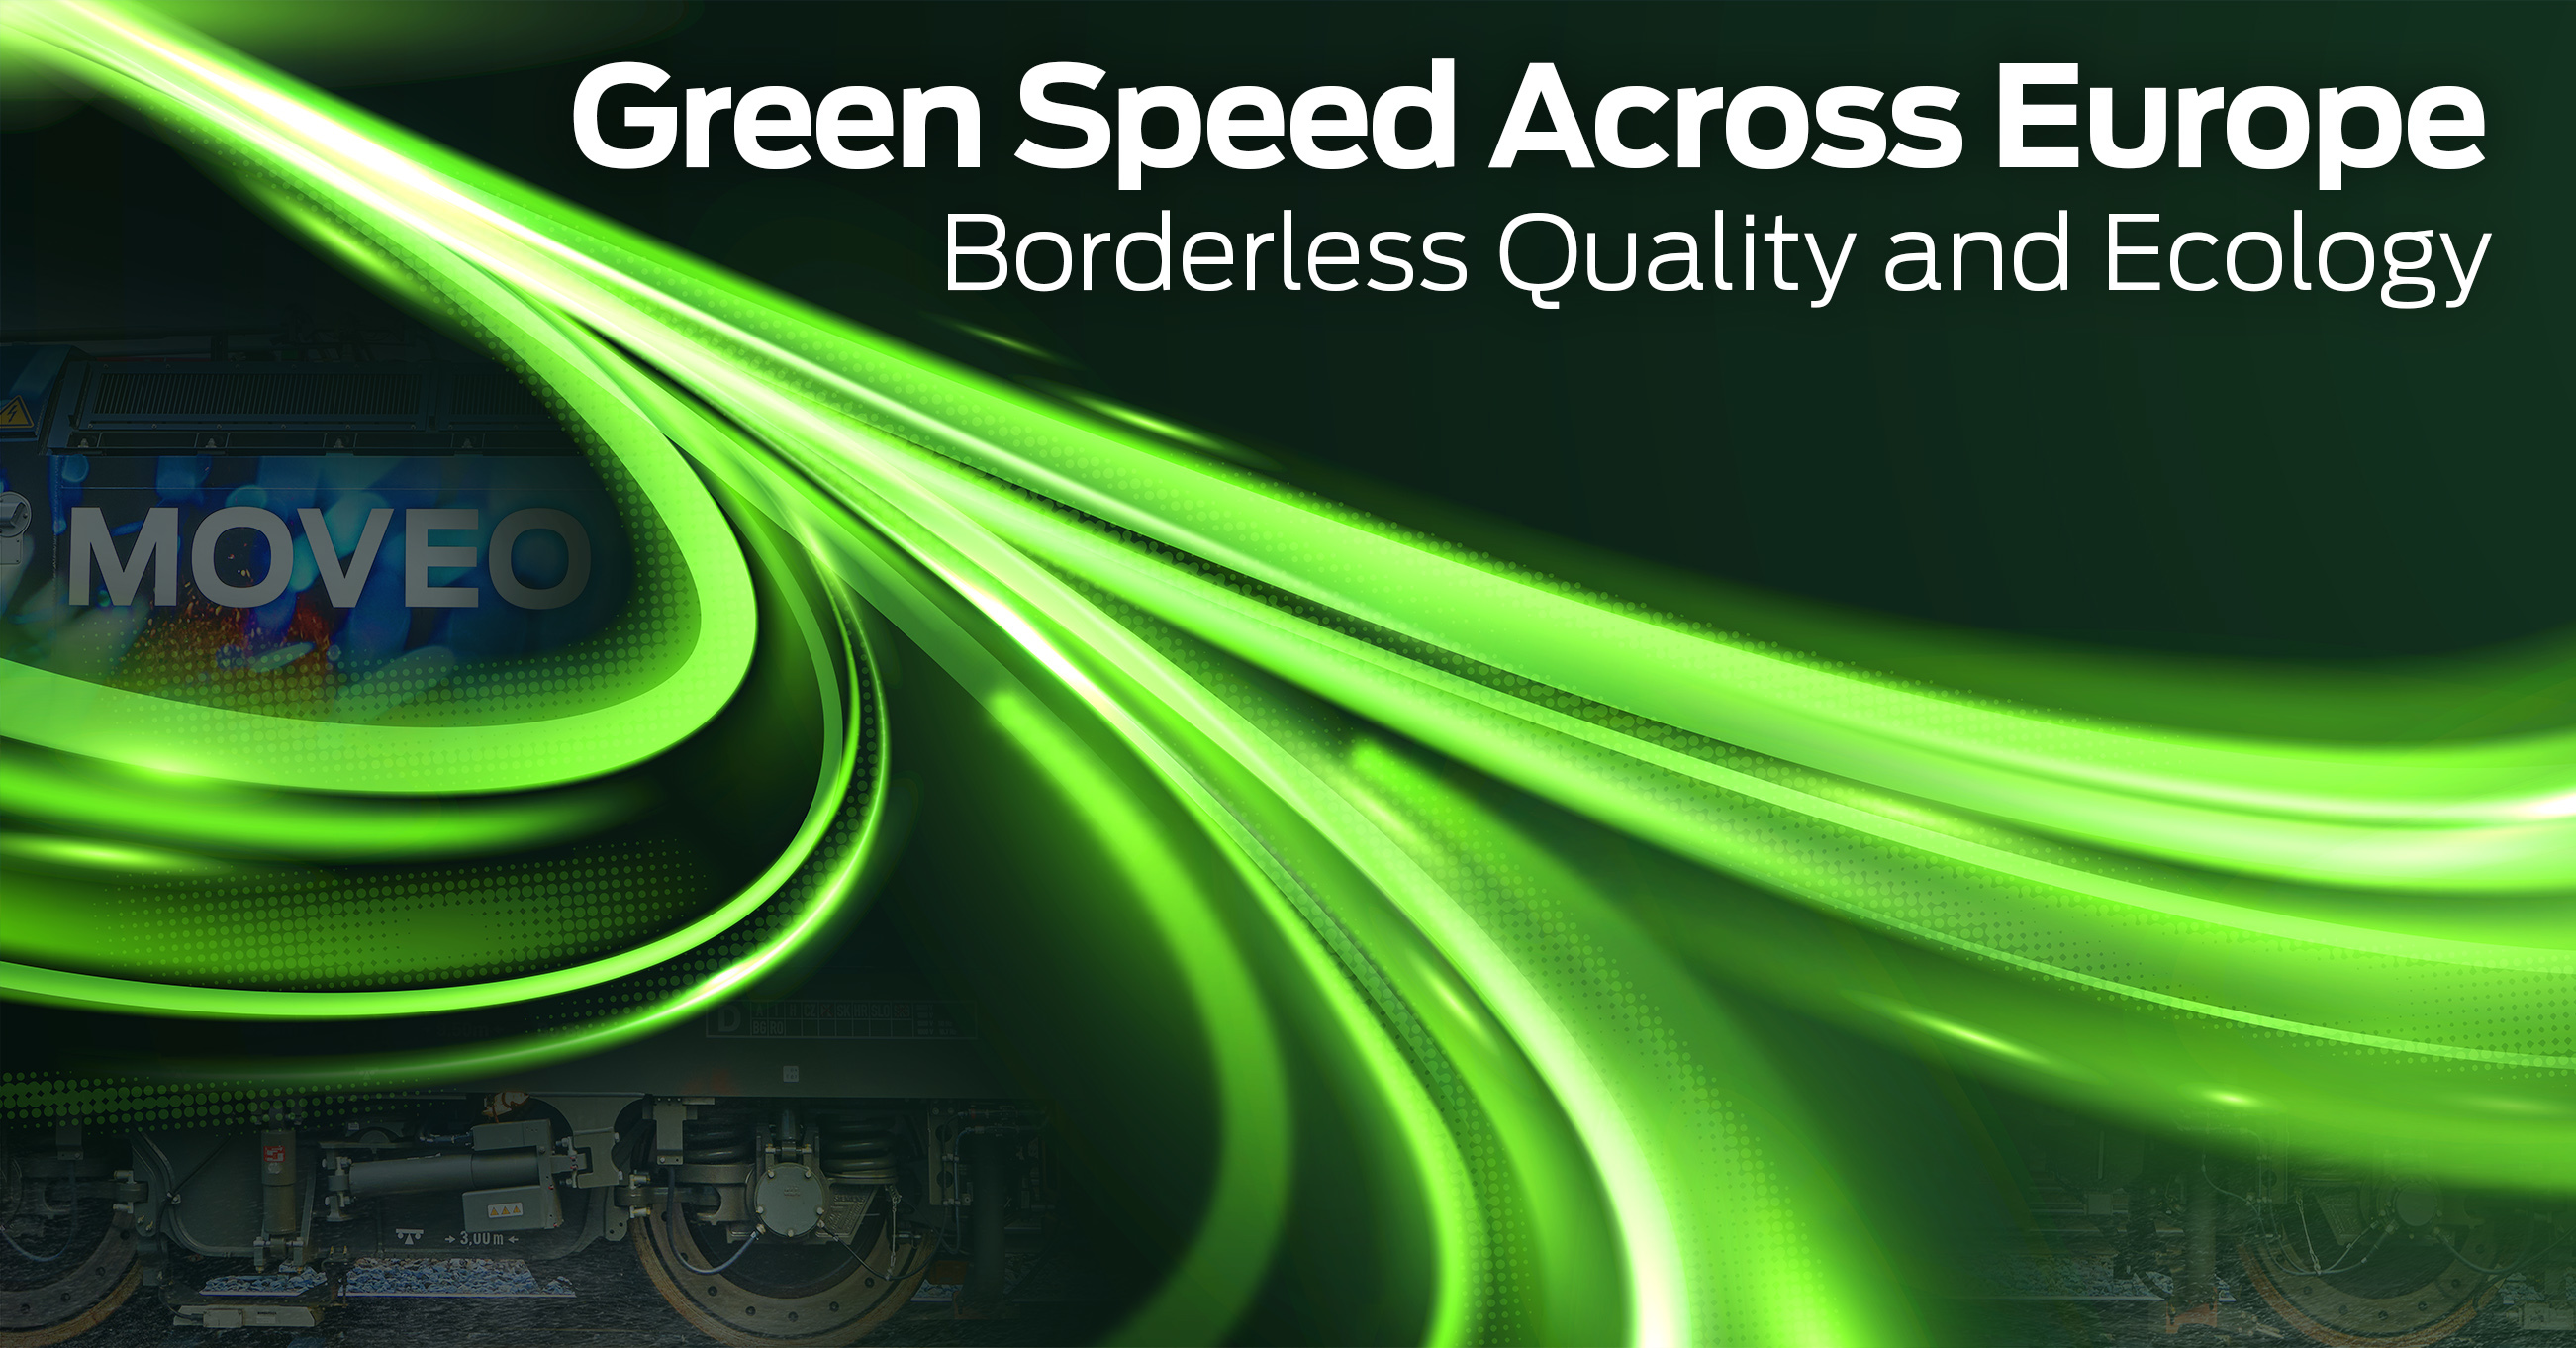 Green Speed Across Europe